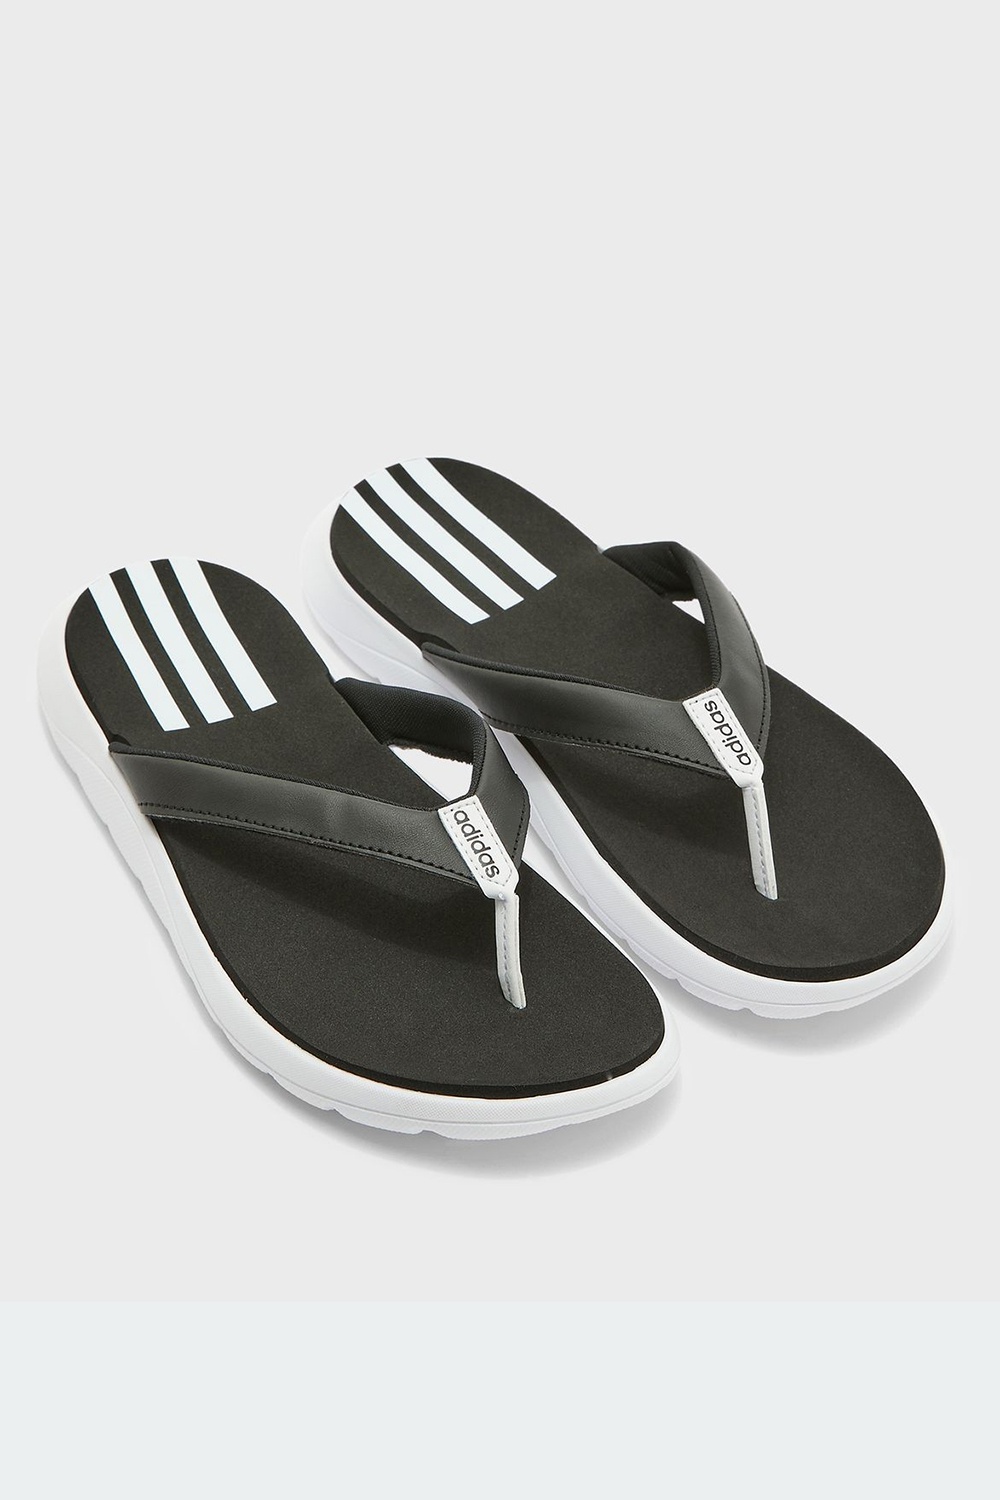 Adidas Originals x Farm Women's Adilette Slides #Adidas #Adilette #SlipOns # Sandals #Fashion #Streetwear #Style #Urban… | Womens slippers boots, Women  shoes, Shoes